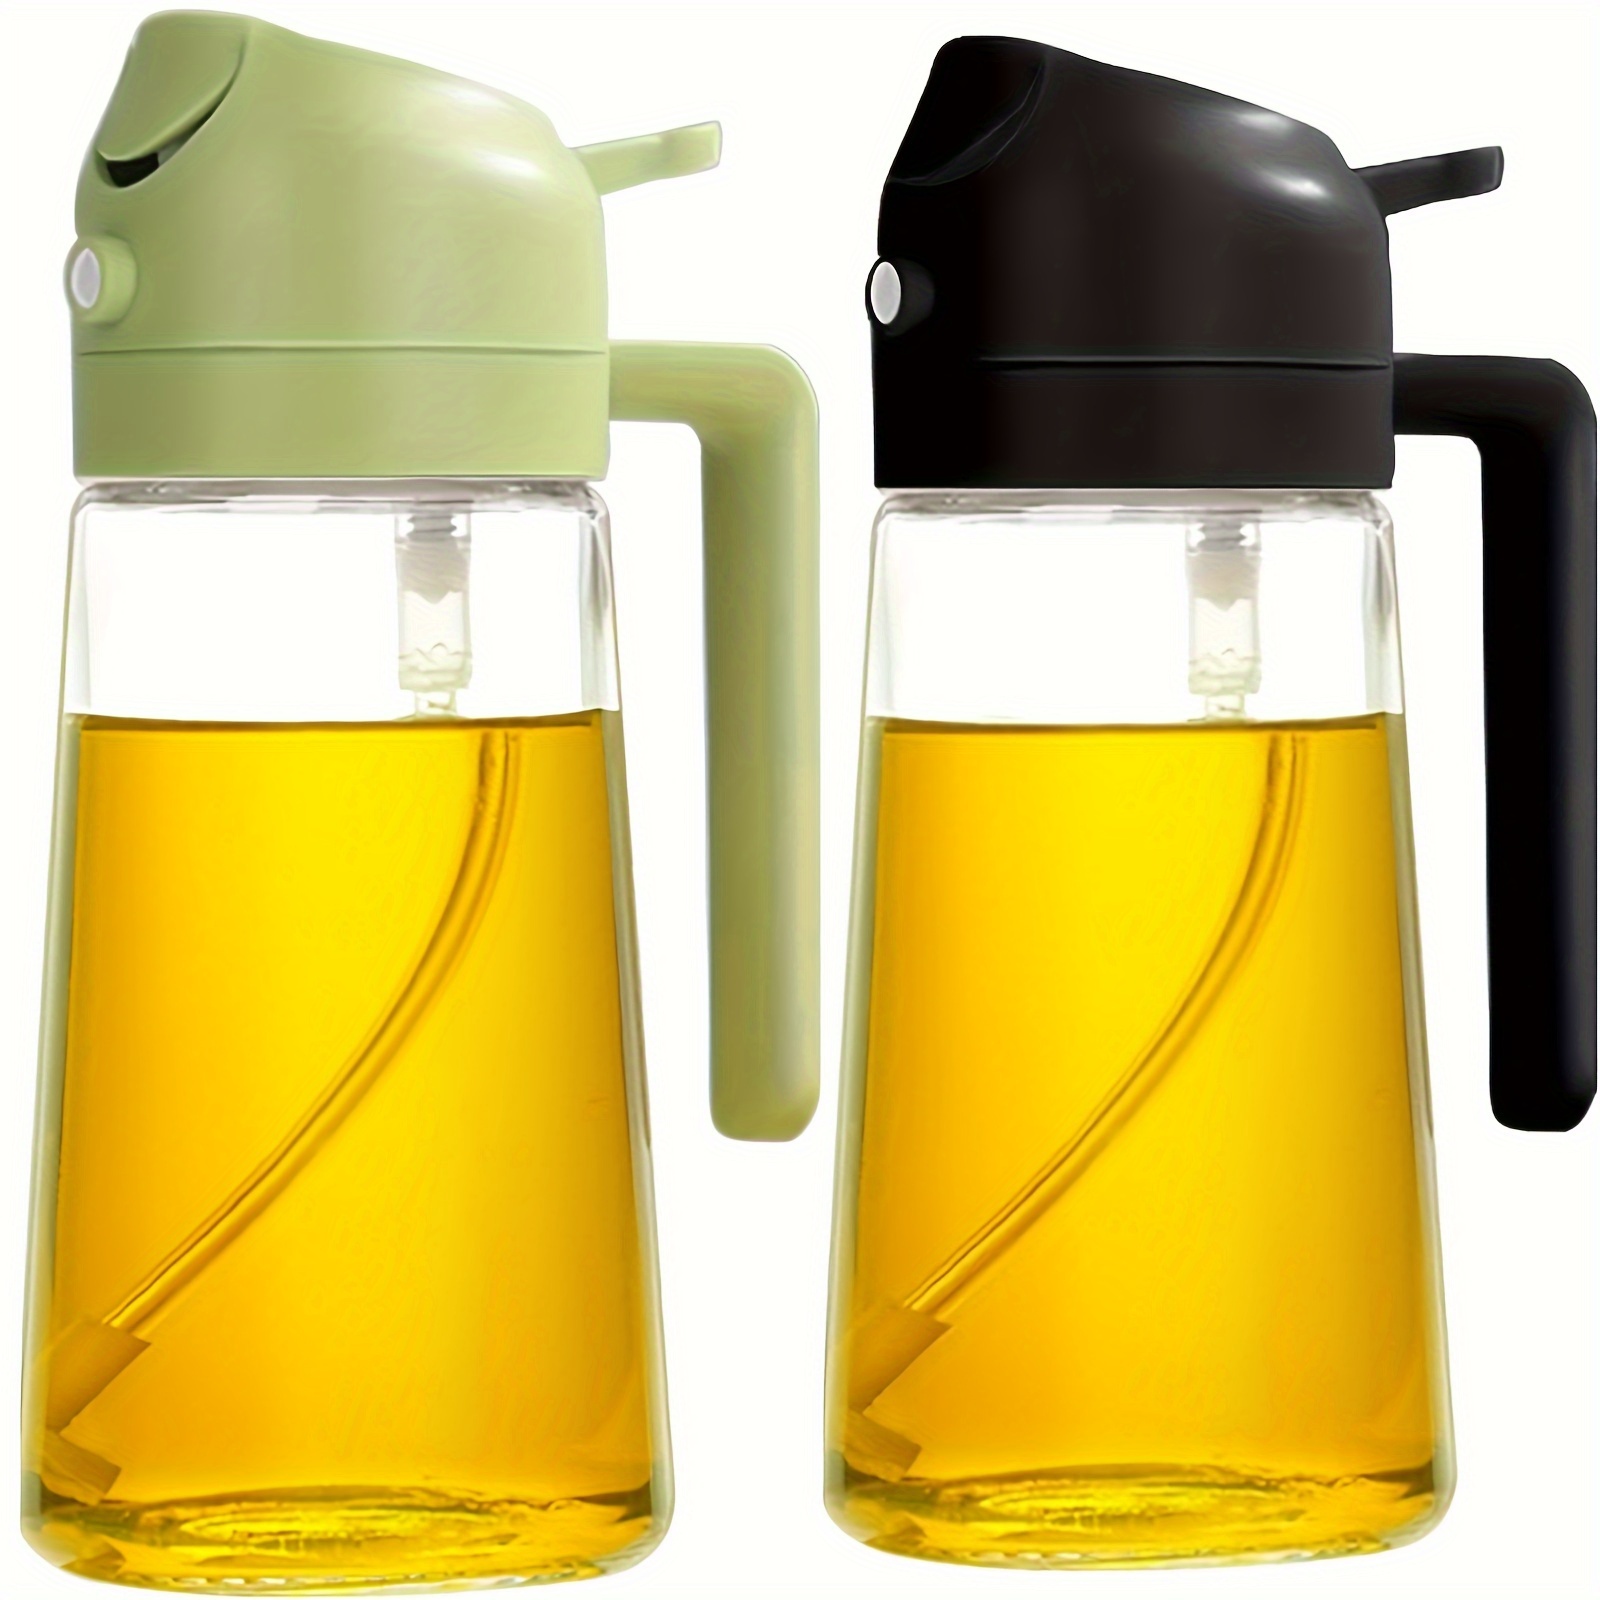 

16oz Oil Dispenser Bottle For Kitchen - 2 In 1 Olive Oil Dispenser And Oil Sprayer - 470ml Olive Oil Bottle - Oil Sprayer For Cooking, Kitchen, Salad, Barbecue